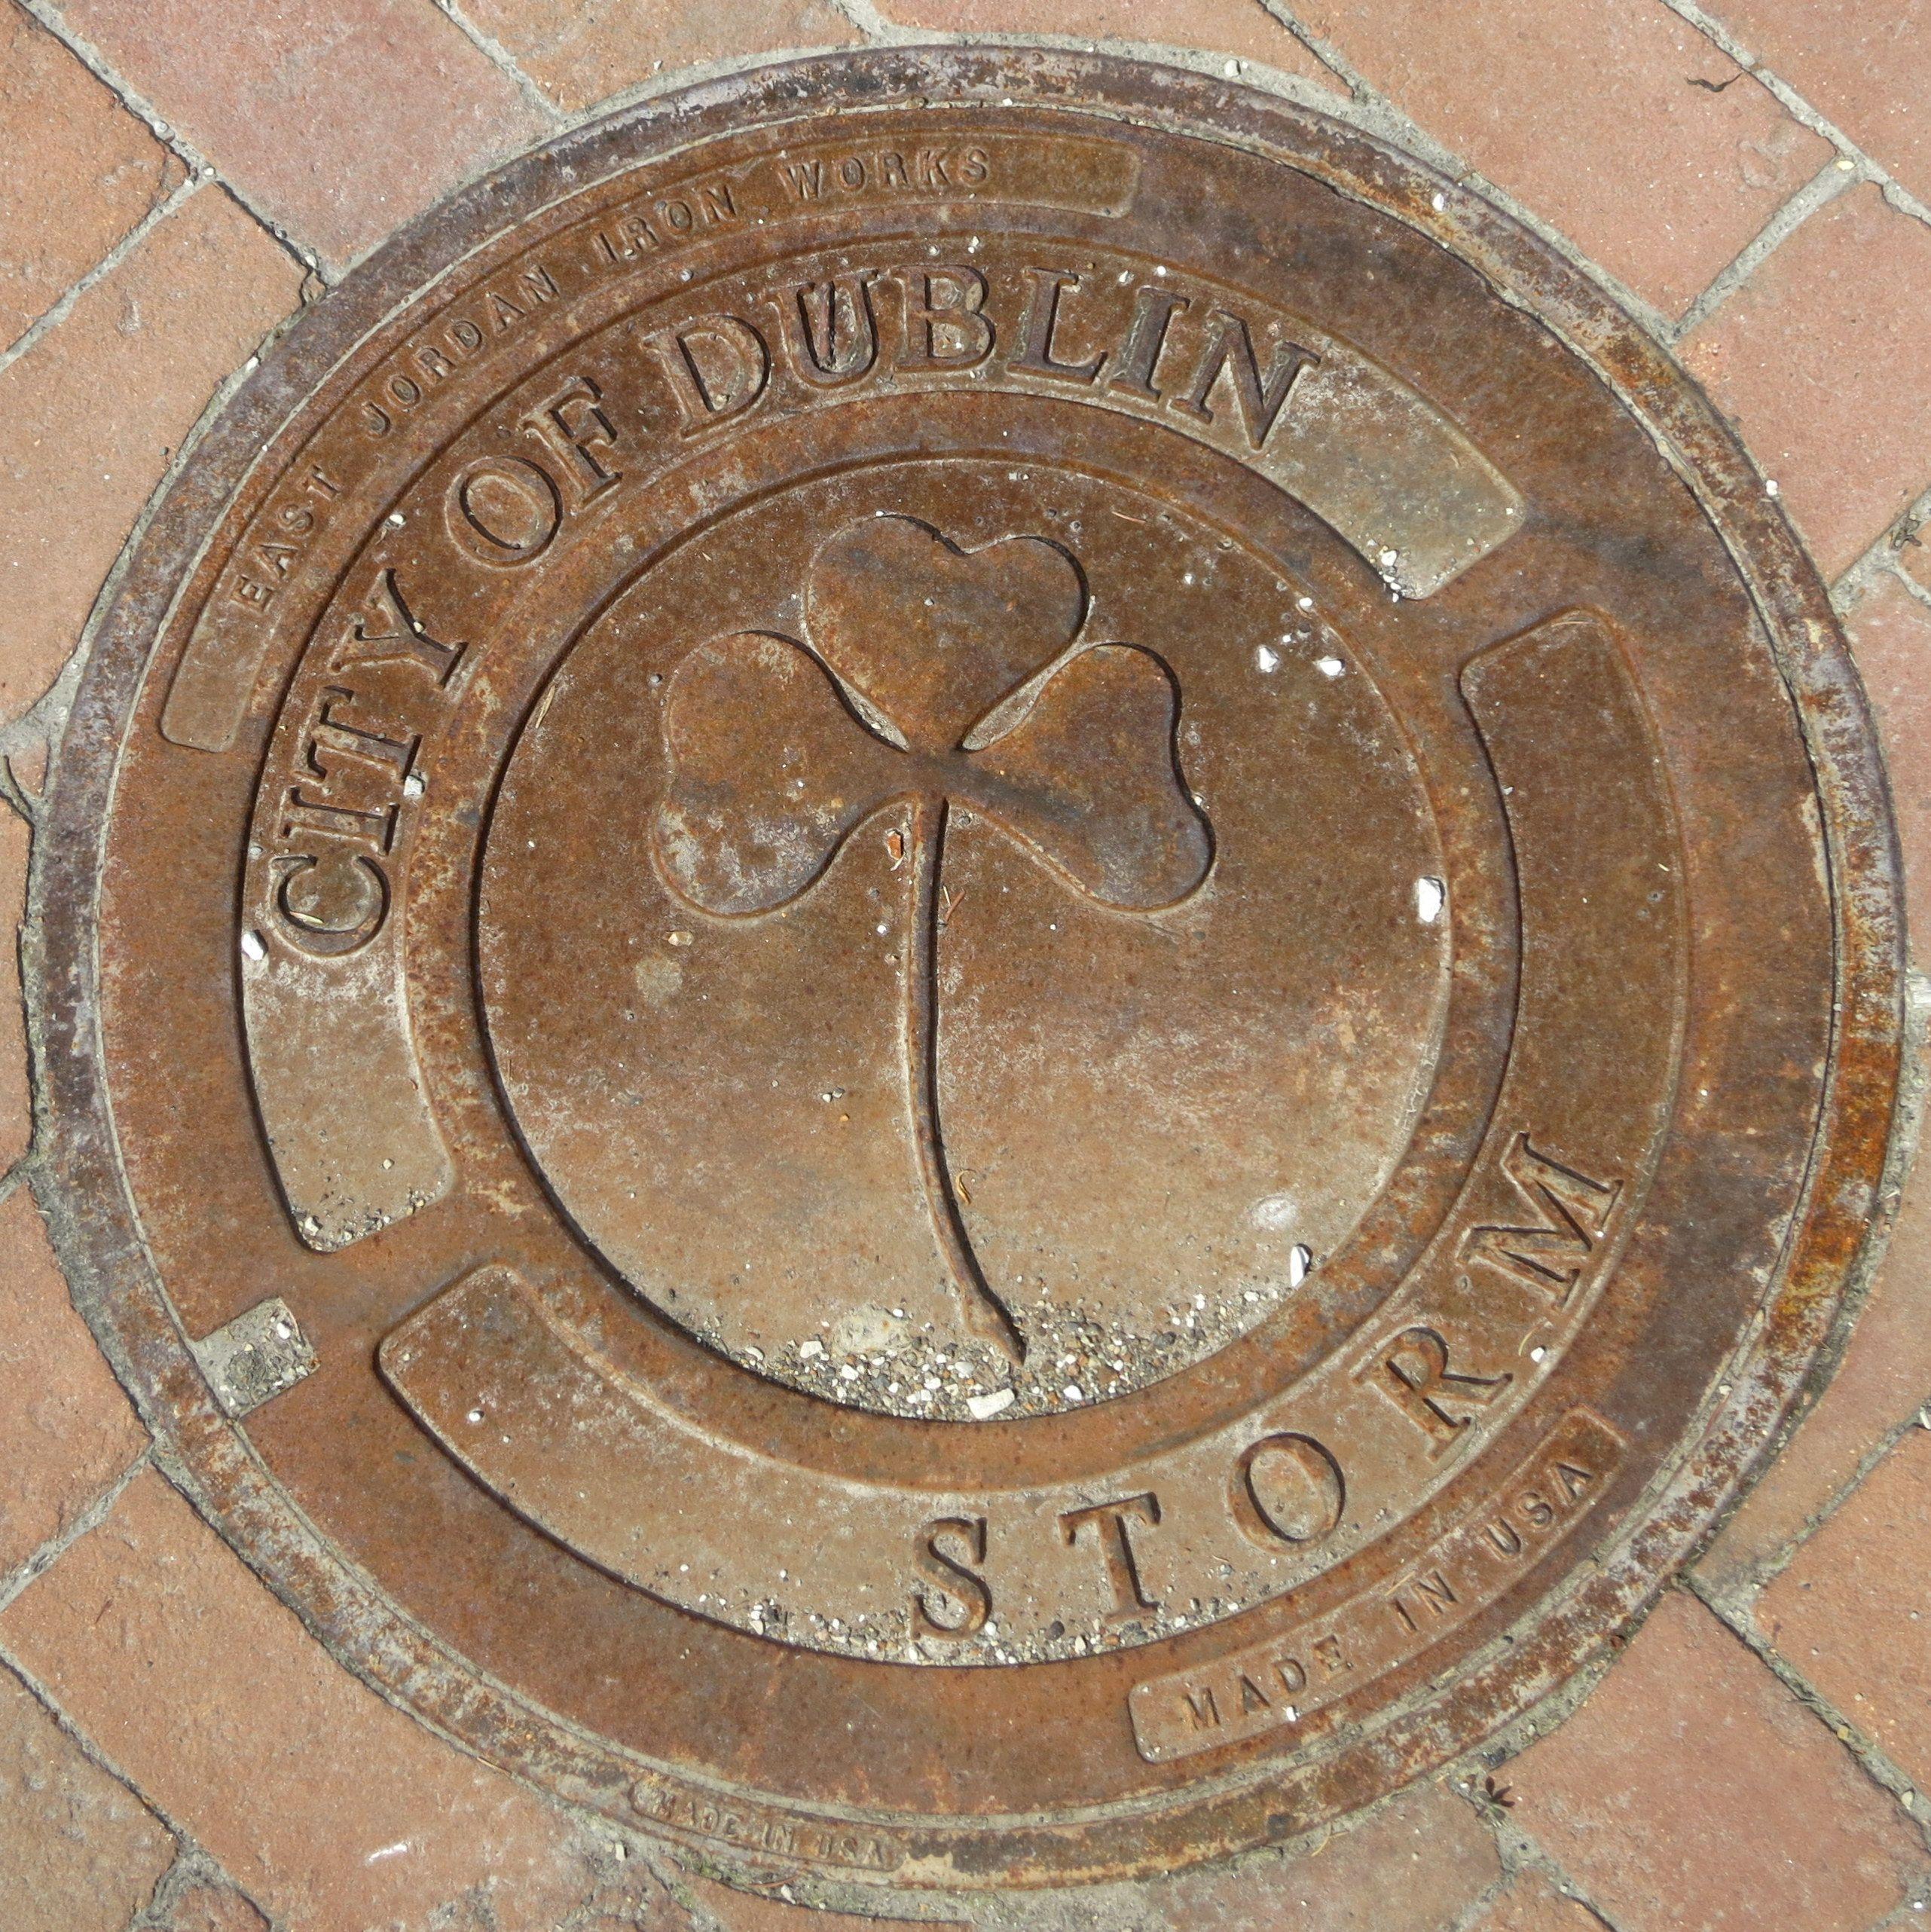 City of Dublin Ohio Logo - City of Dublin storm drain cover (Dublin, Ohio)